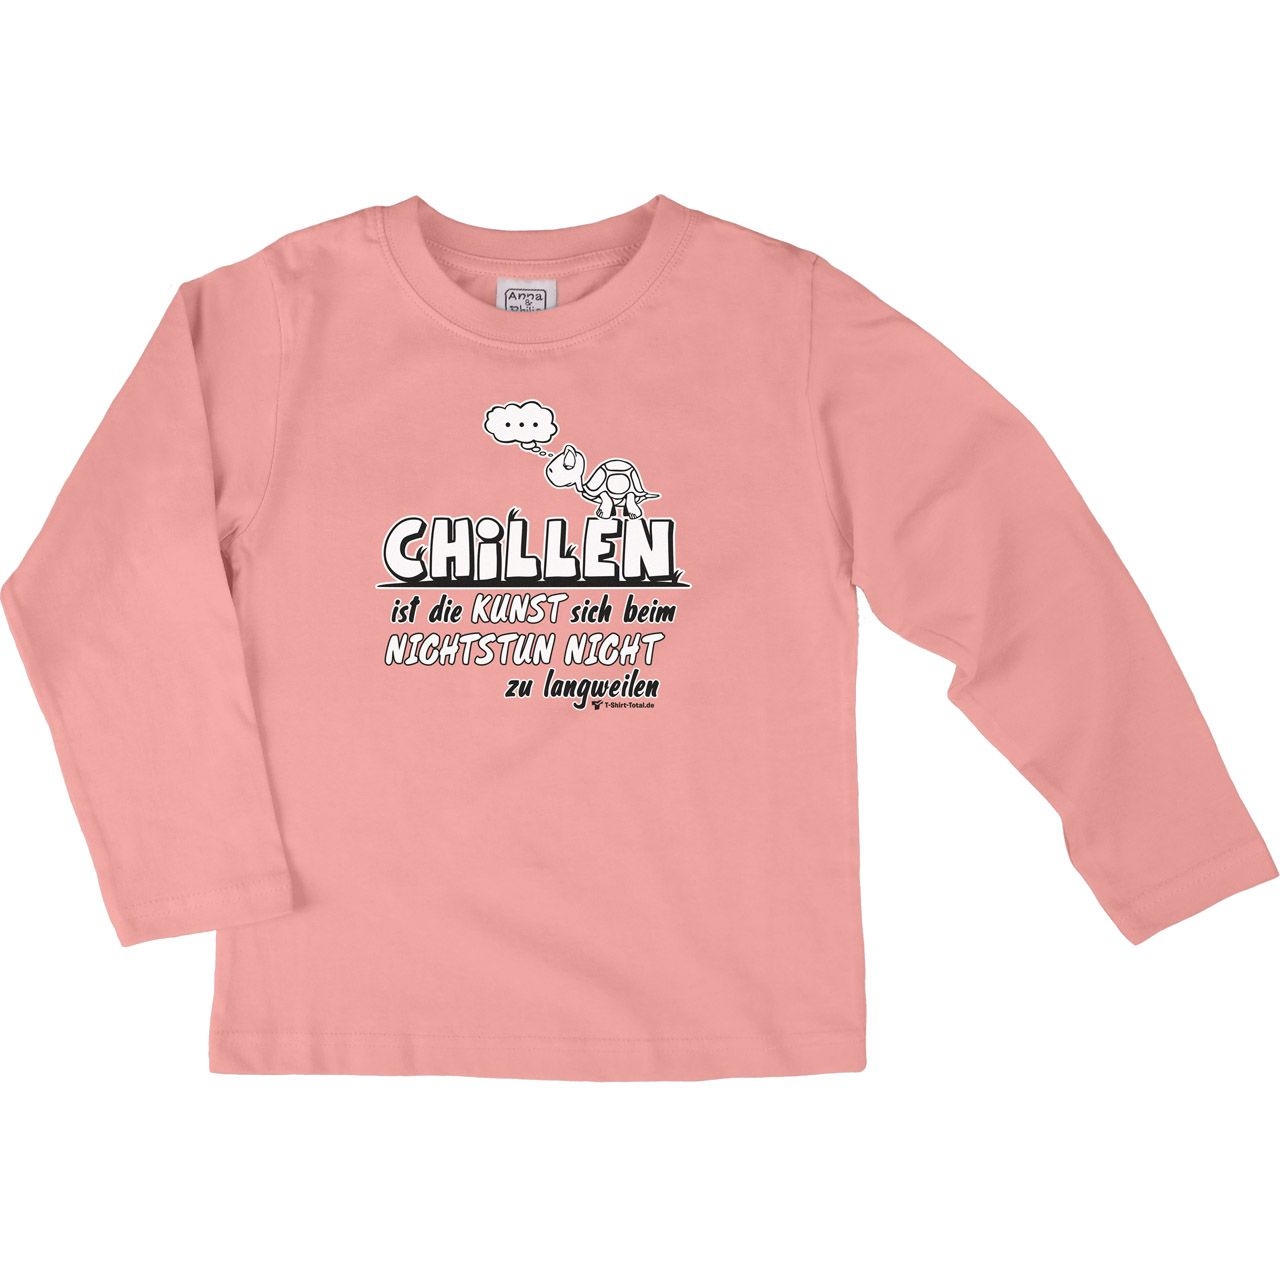 Chillen Kinder Langarm Shirt rosa 134 / 140